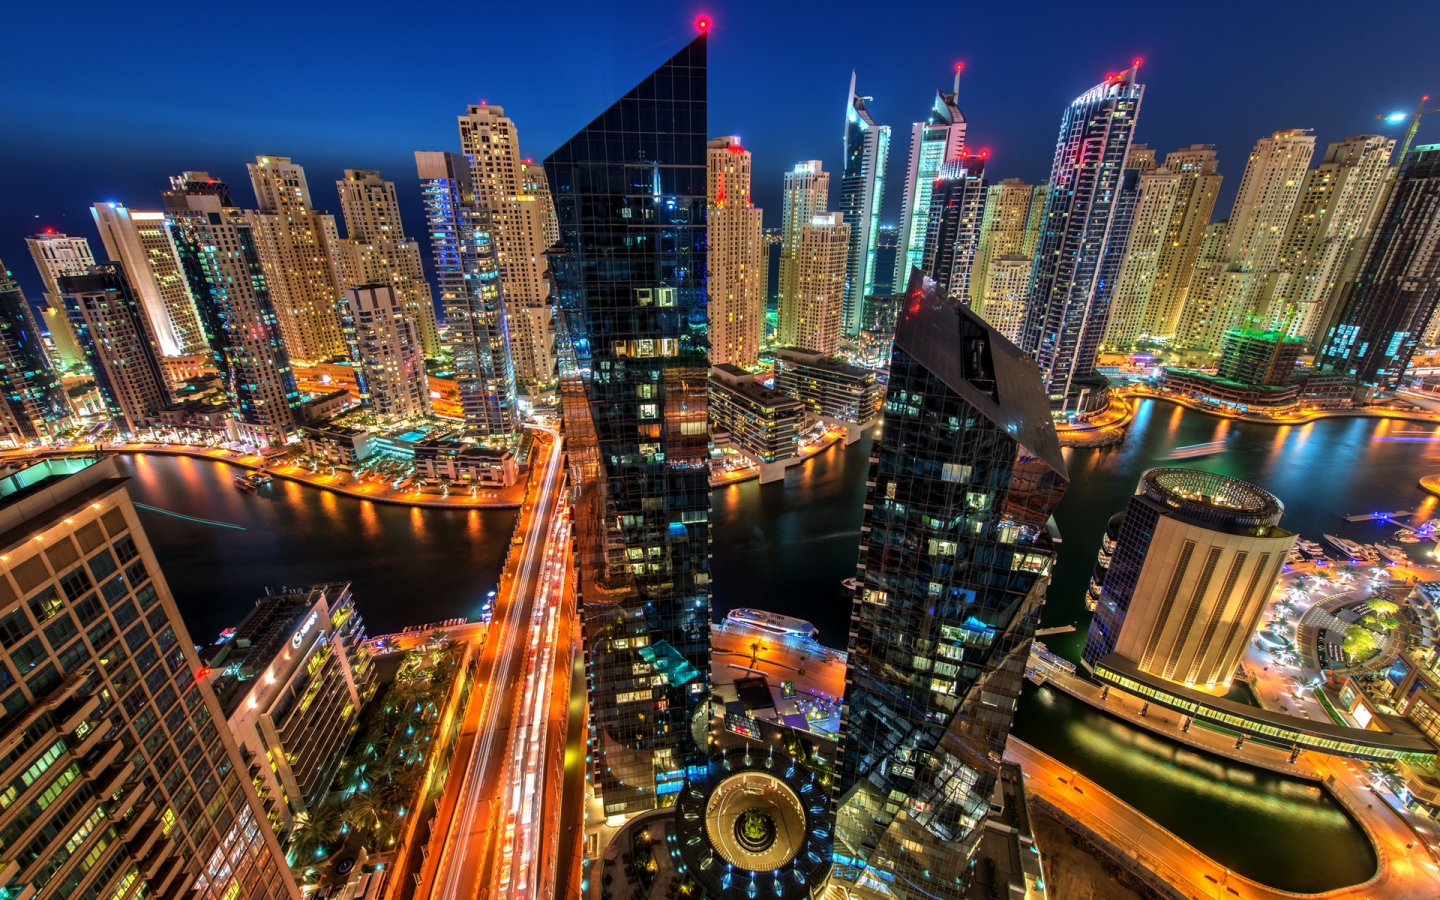 Night in Dubai for 1440 x 900 widescreen resolution